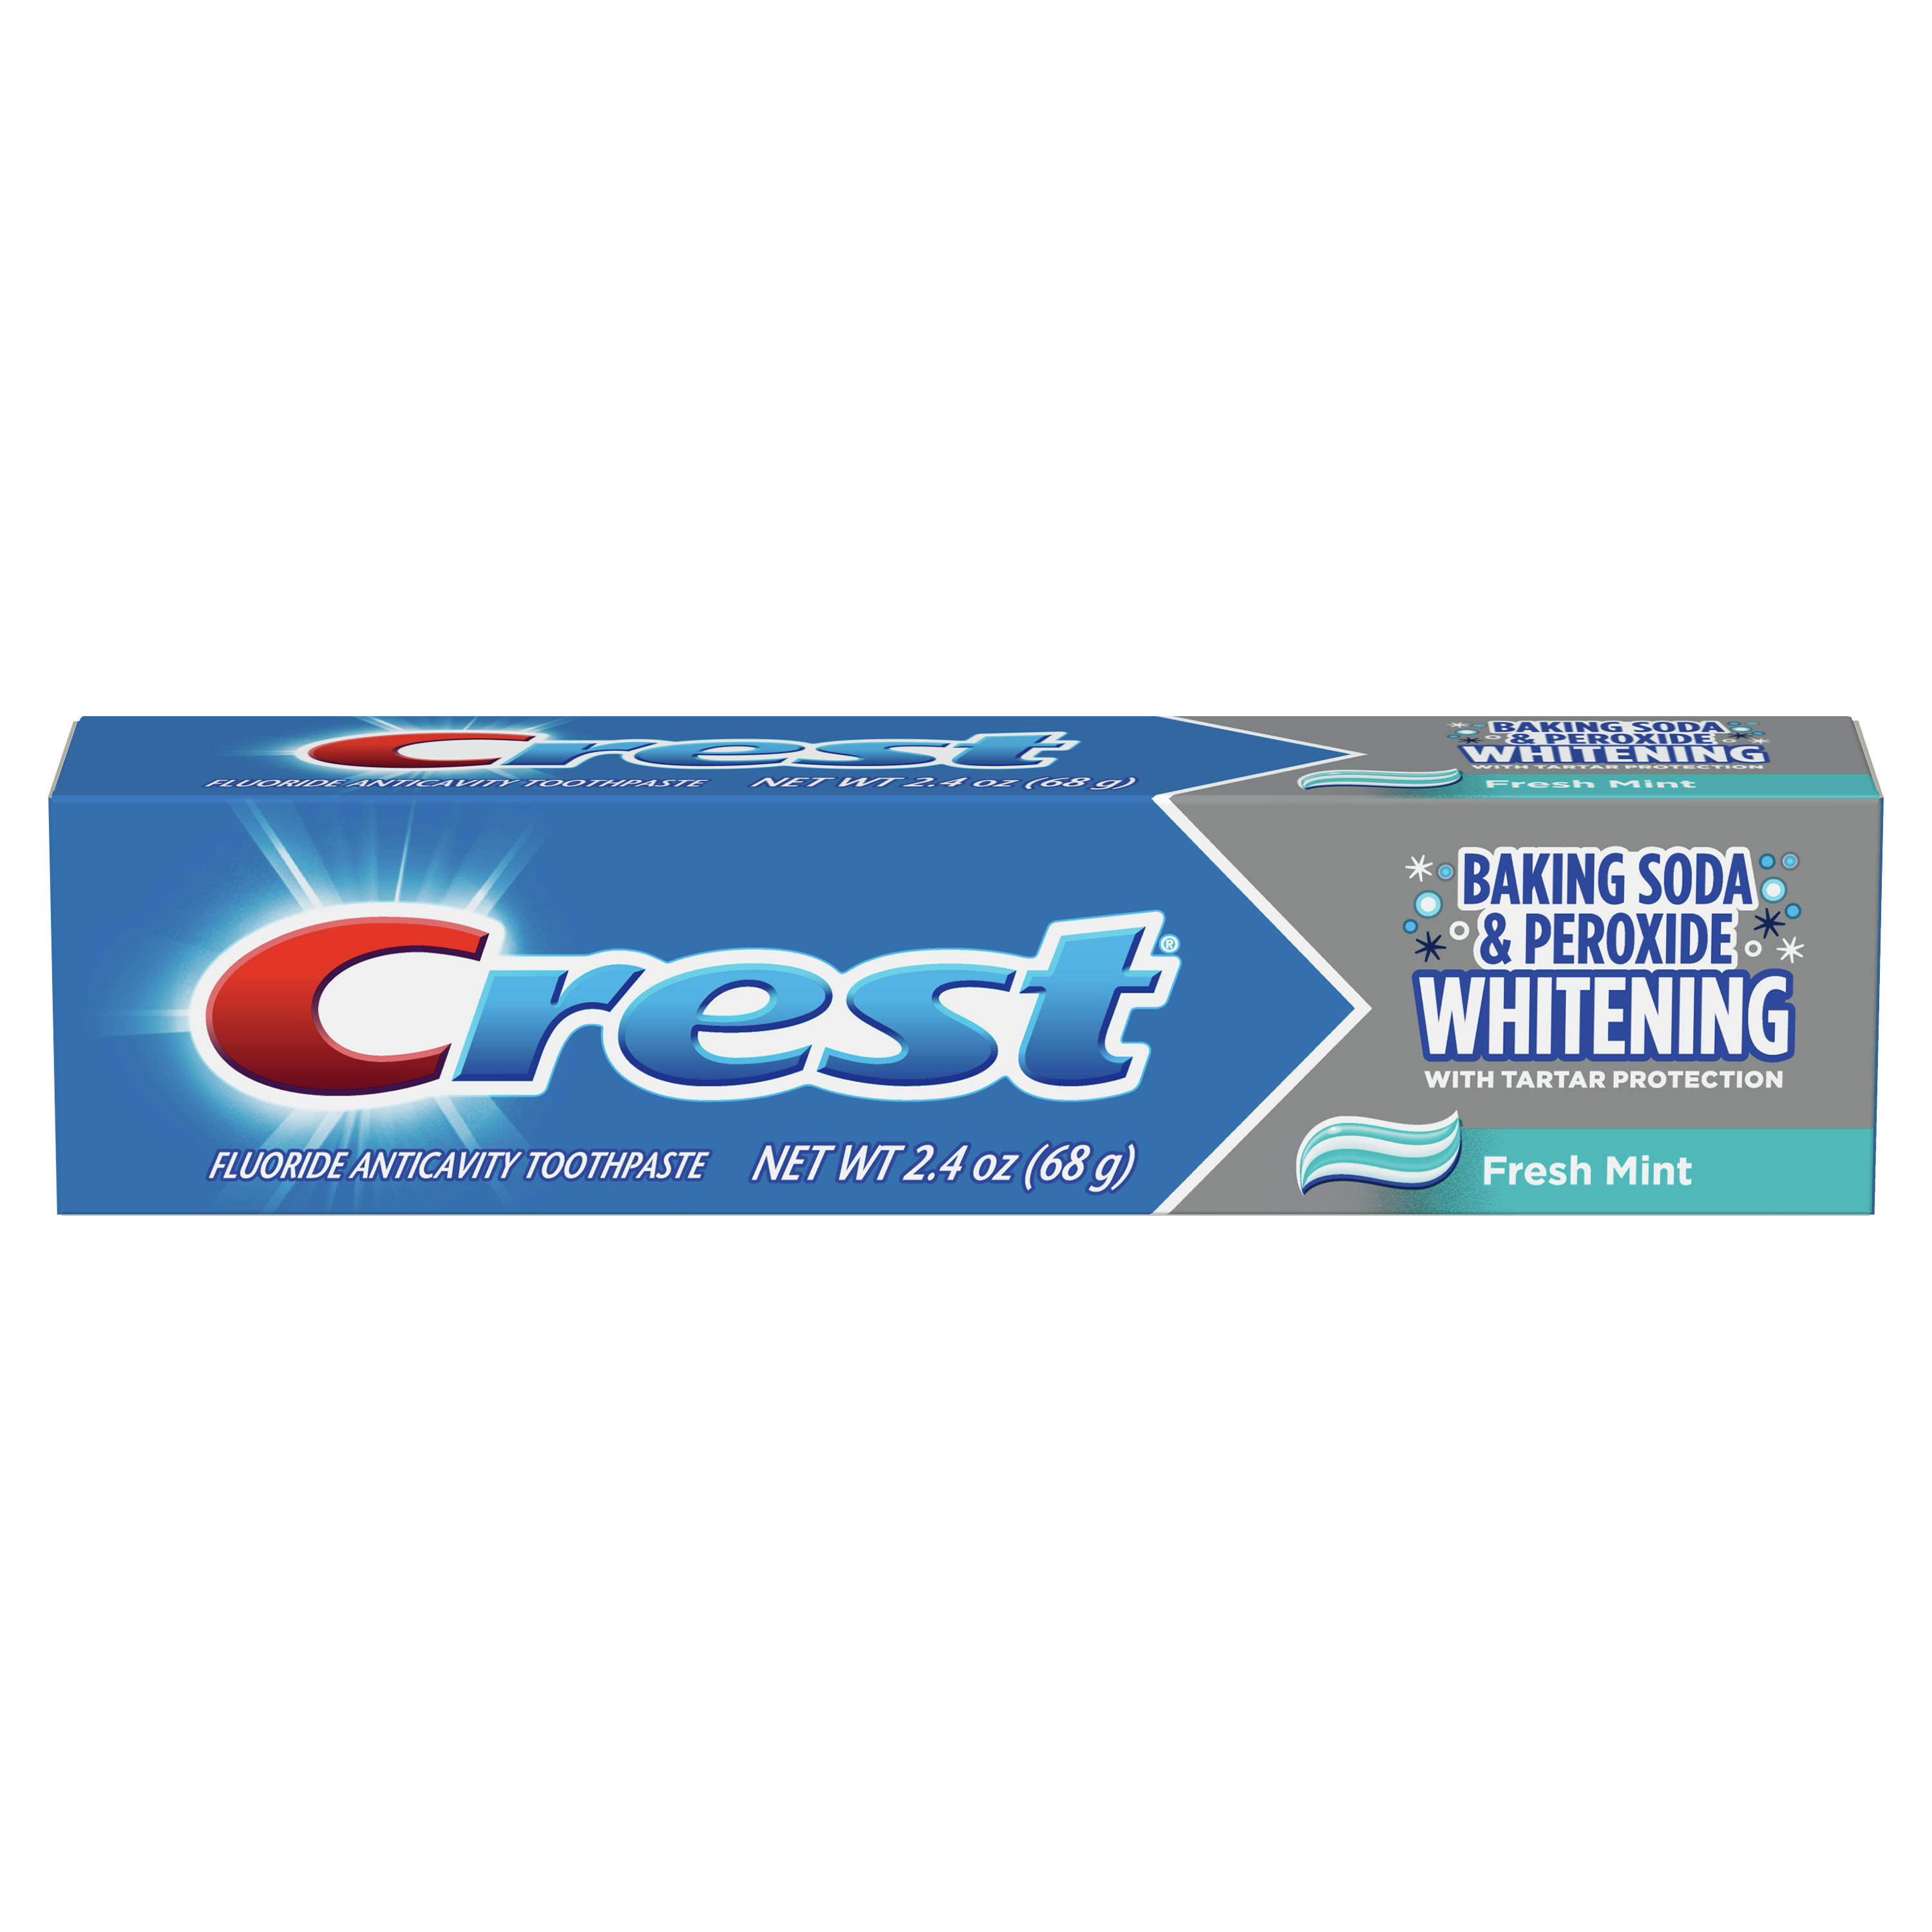 Crest Fluoride Anticavity Toothpaste, Whitening, Baking Soda & Peroxide, Fresh Mint - 2.4 oz